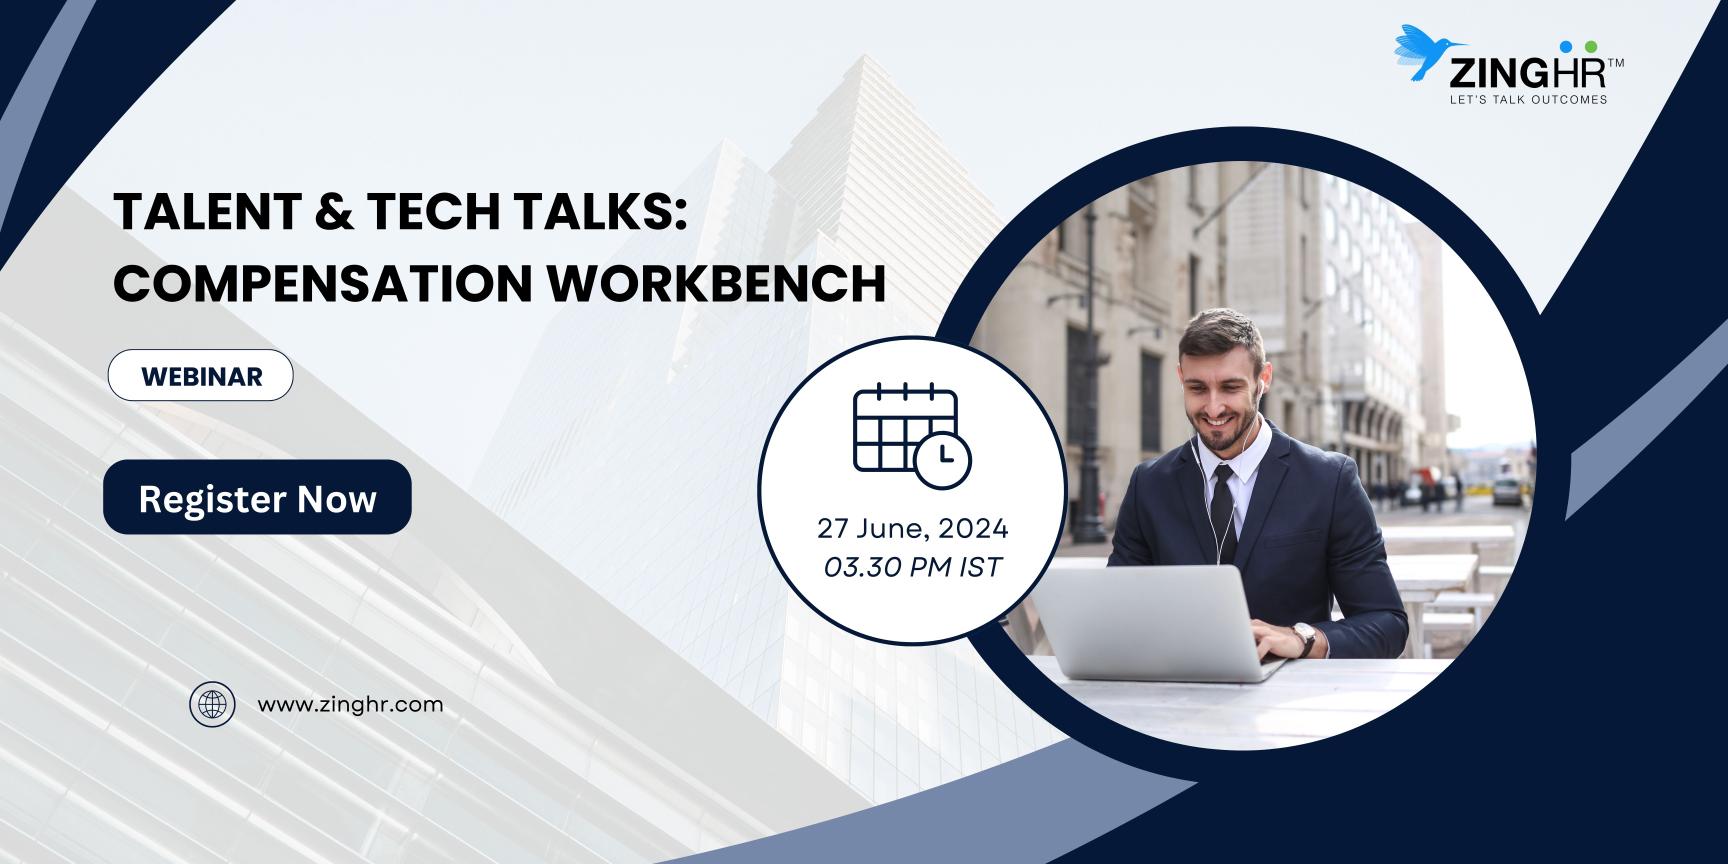 Exclusive Webinar on Talent & Tech Talks – Compensation Workbench